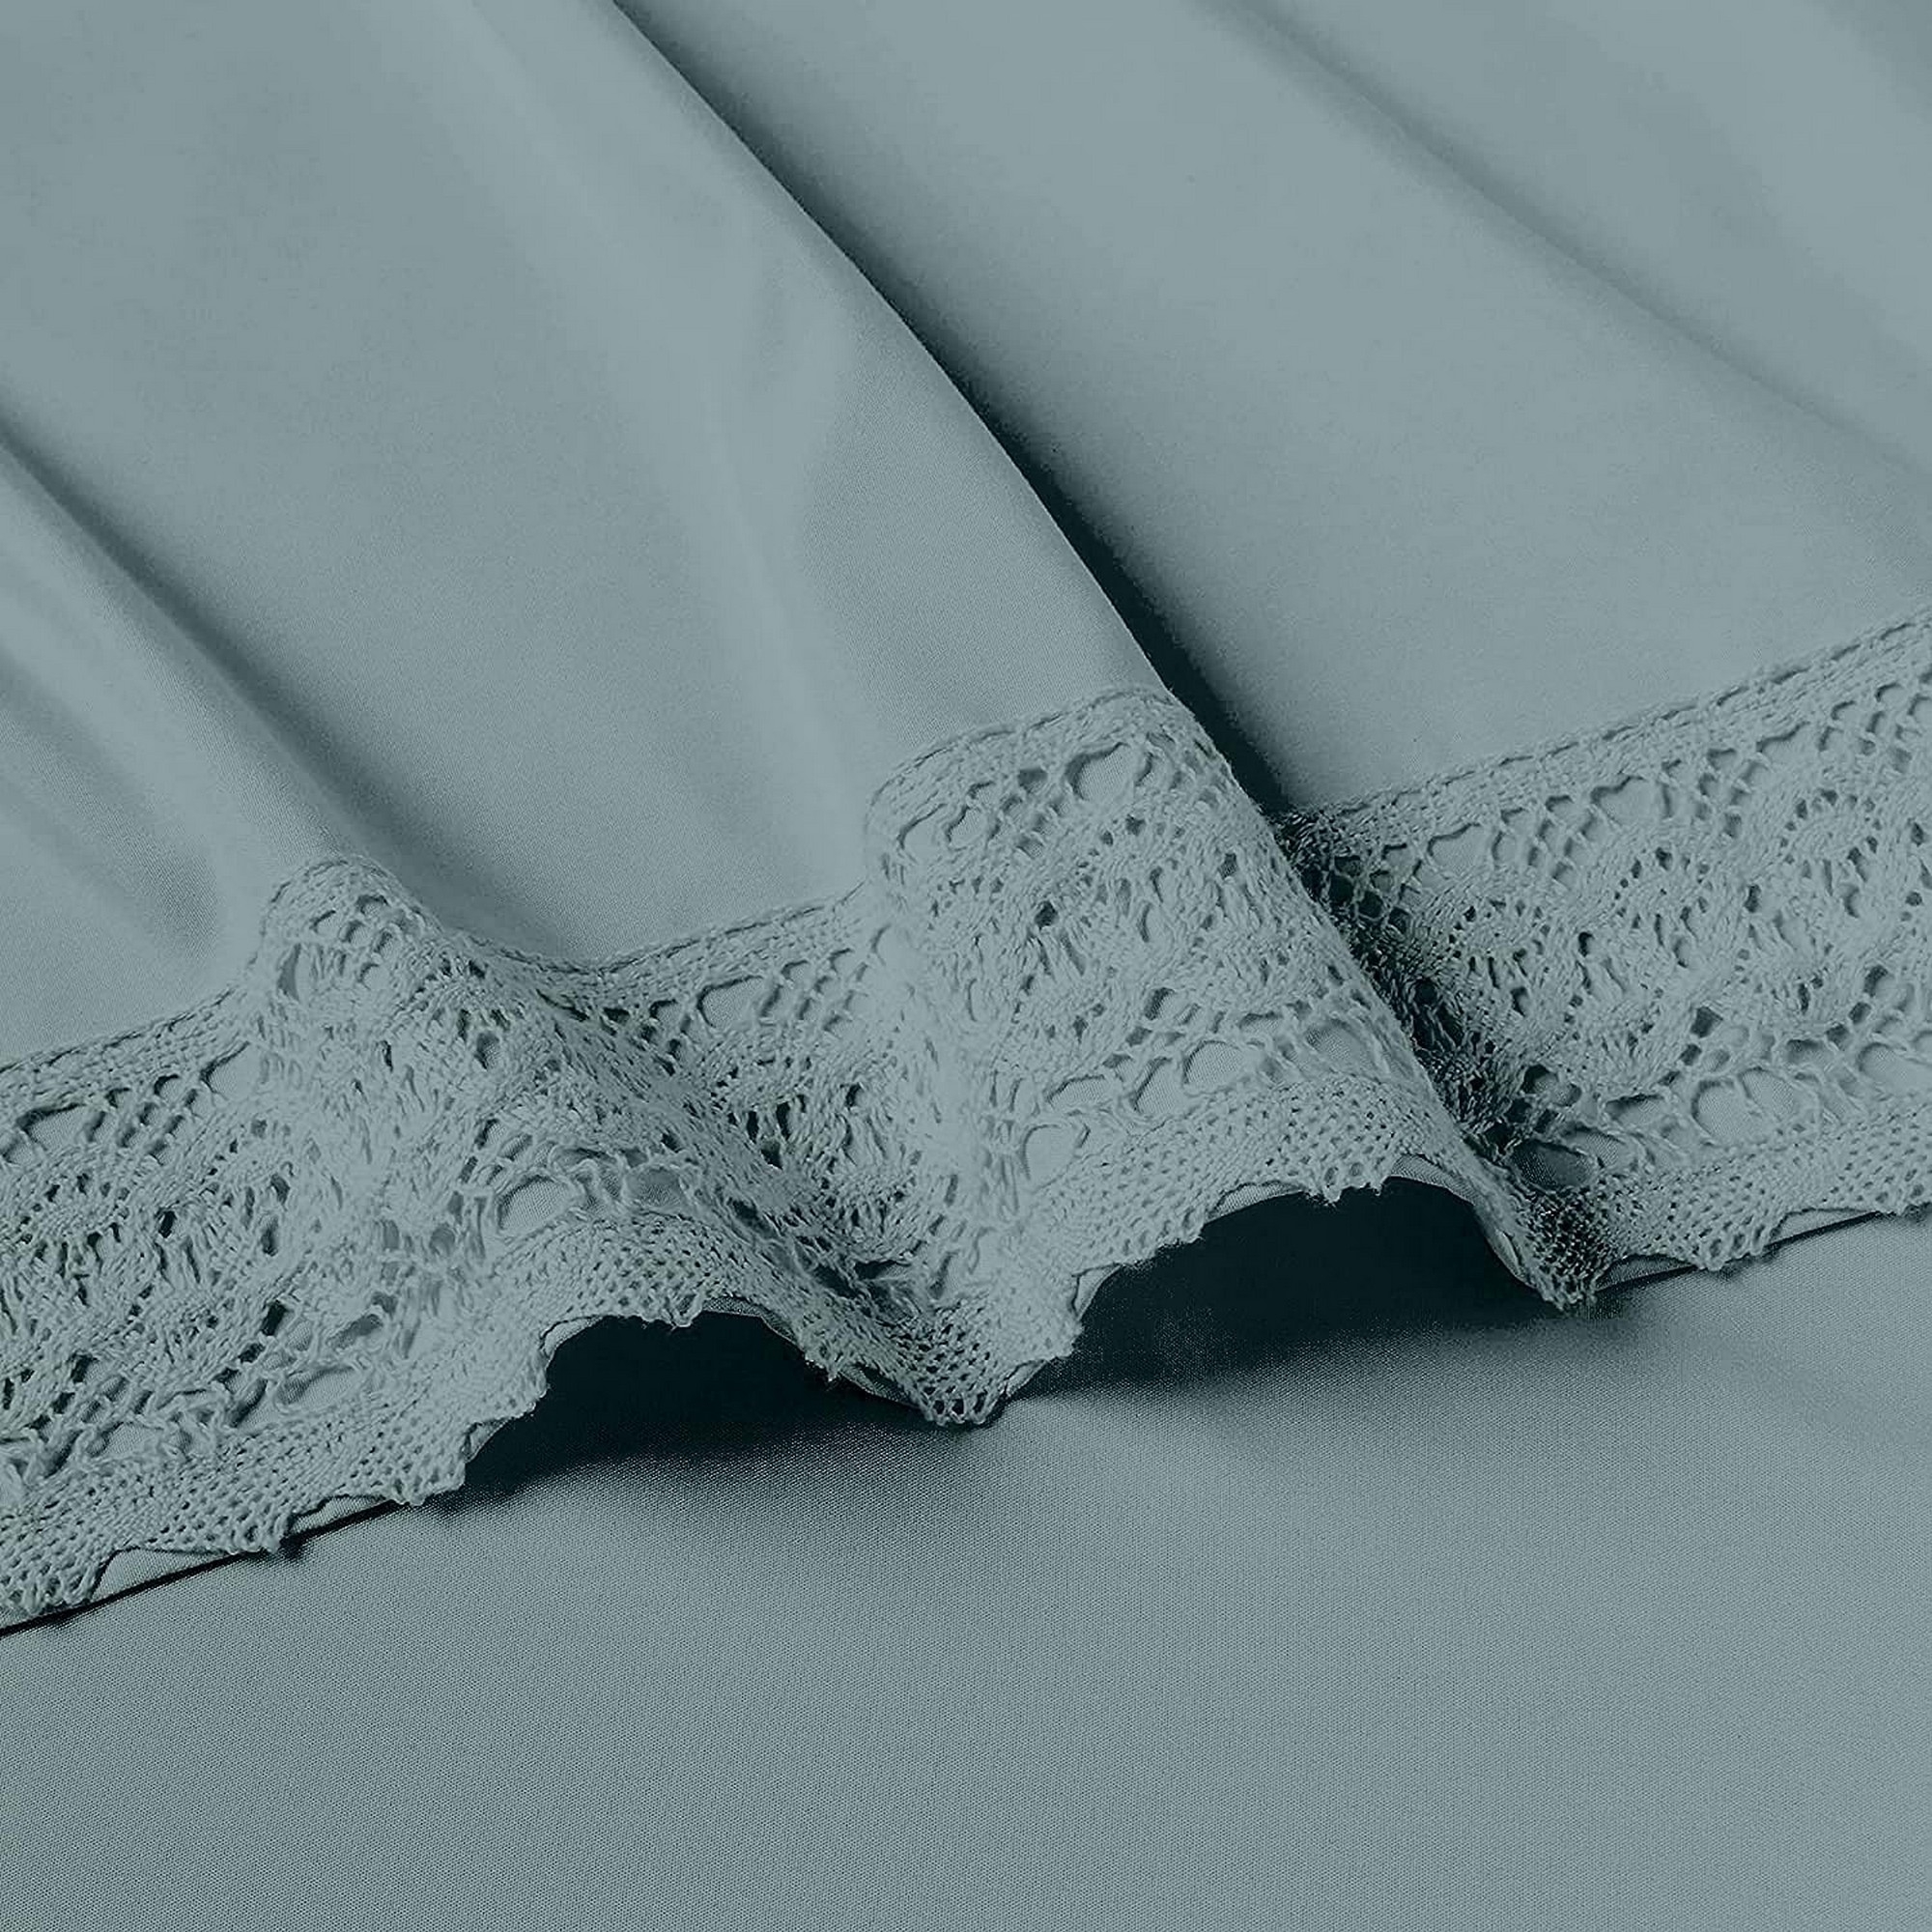 Edra 4 Piece Microfiber King Size Sheet Set With Crochet Lace, Teal Gray- Saltoro Sherpi